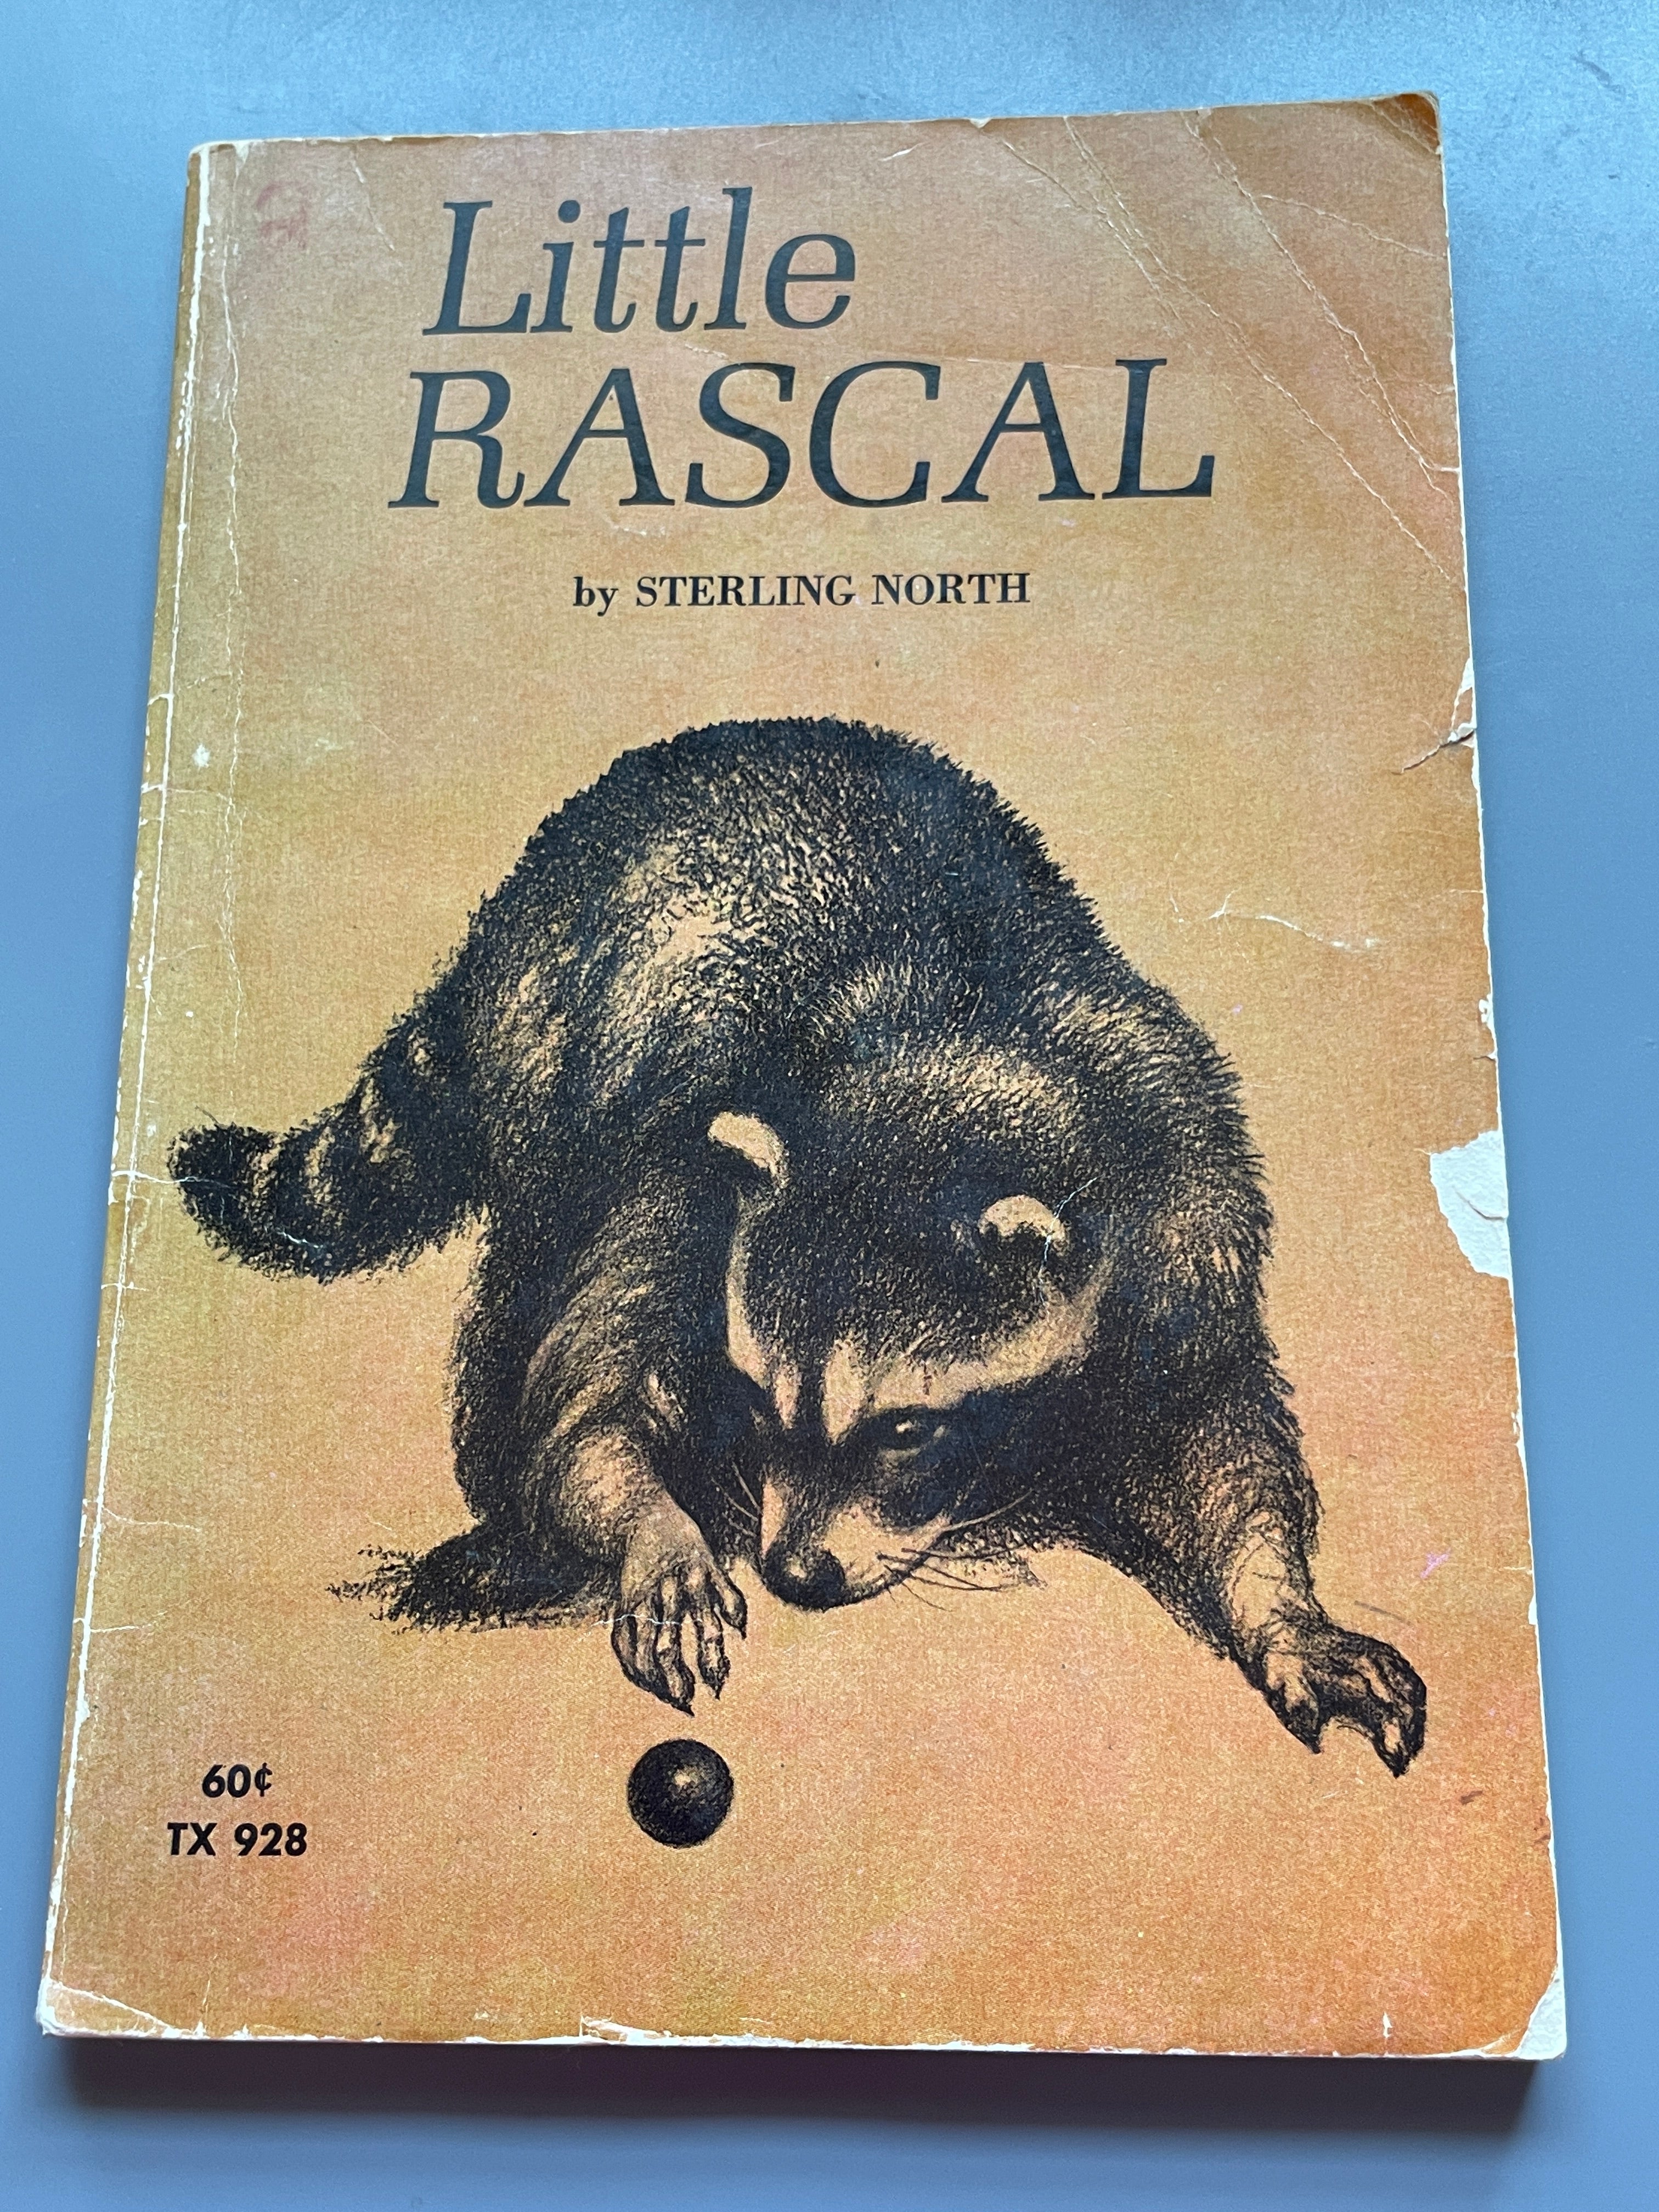 rascal book